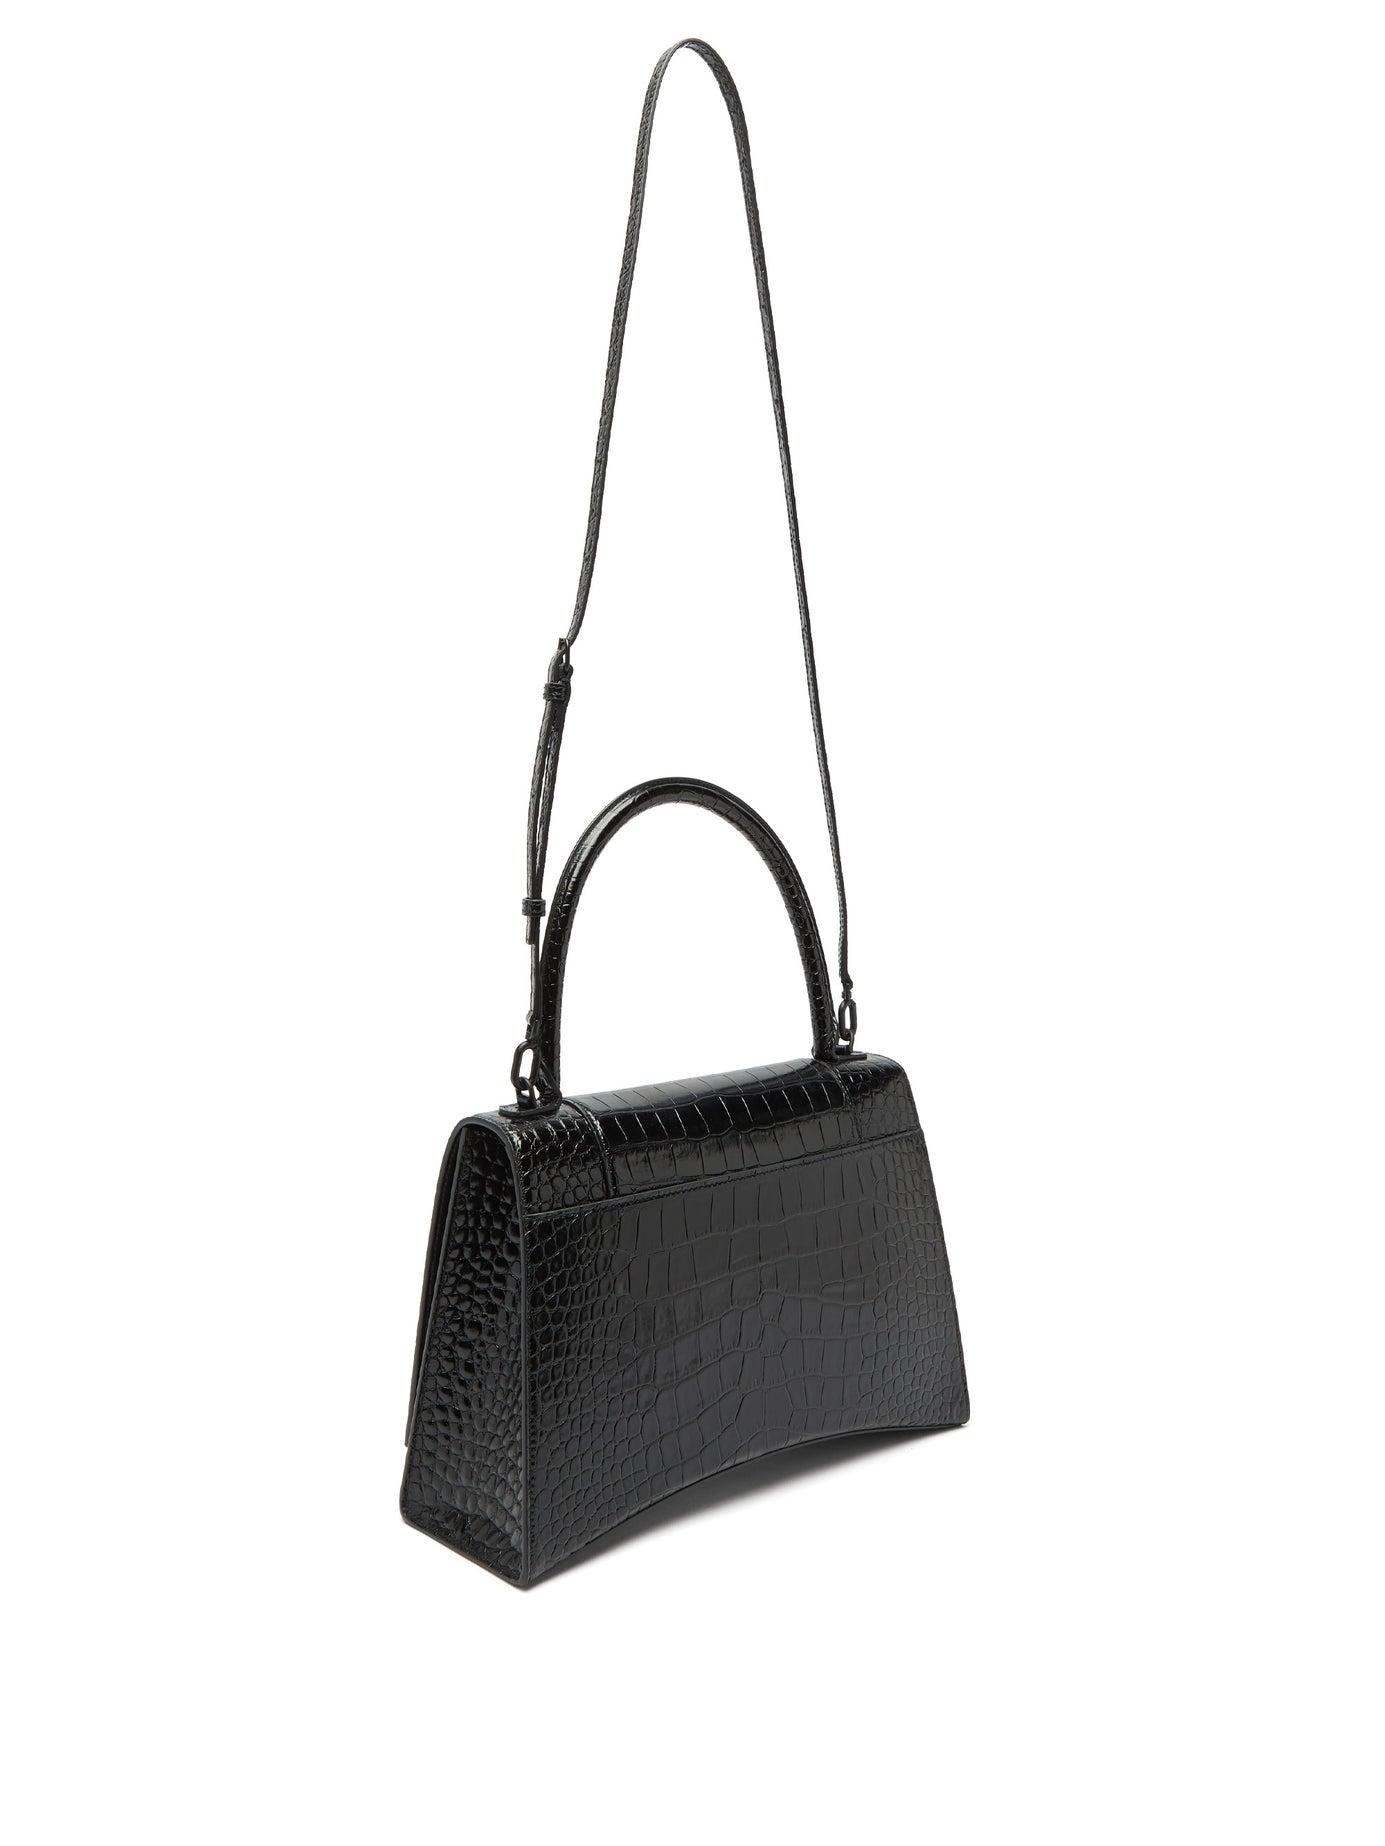 Black Hourglass S crocodile-effect leather bag, Balenciaga